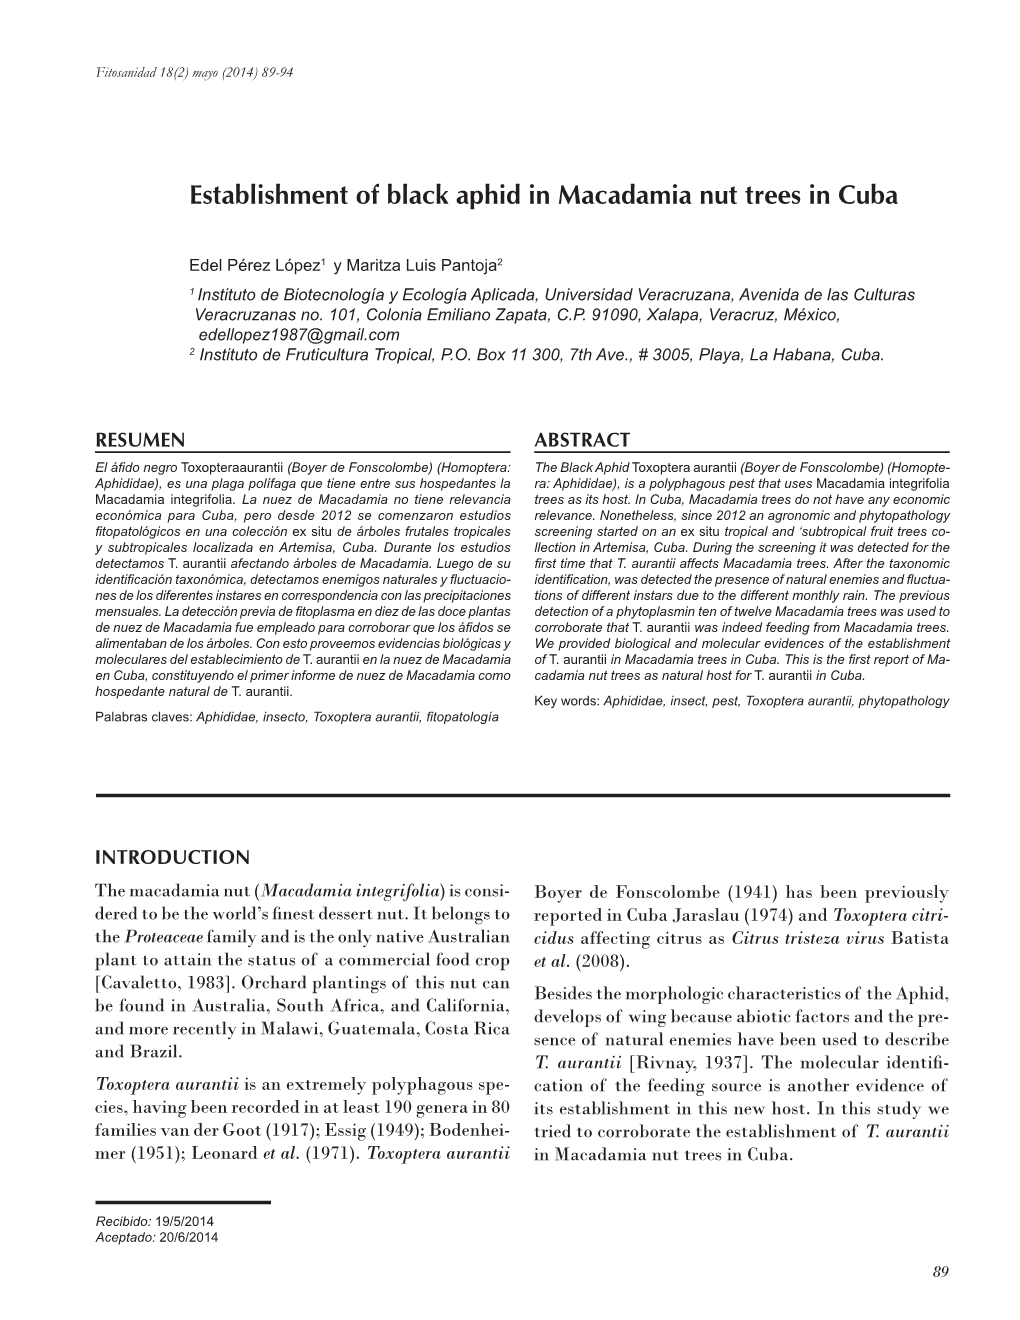 Redalyc.Establishment of Black Aphid in Macadamia Nut Trees in Cuba